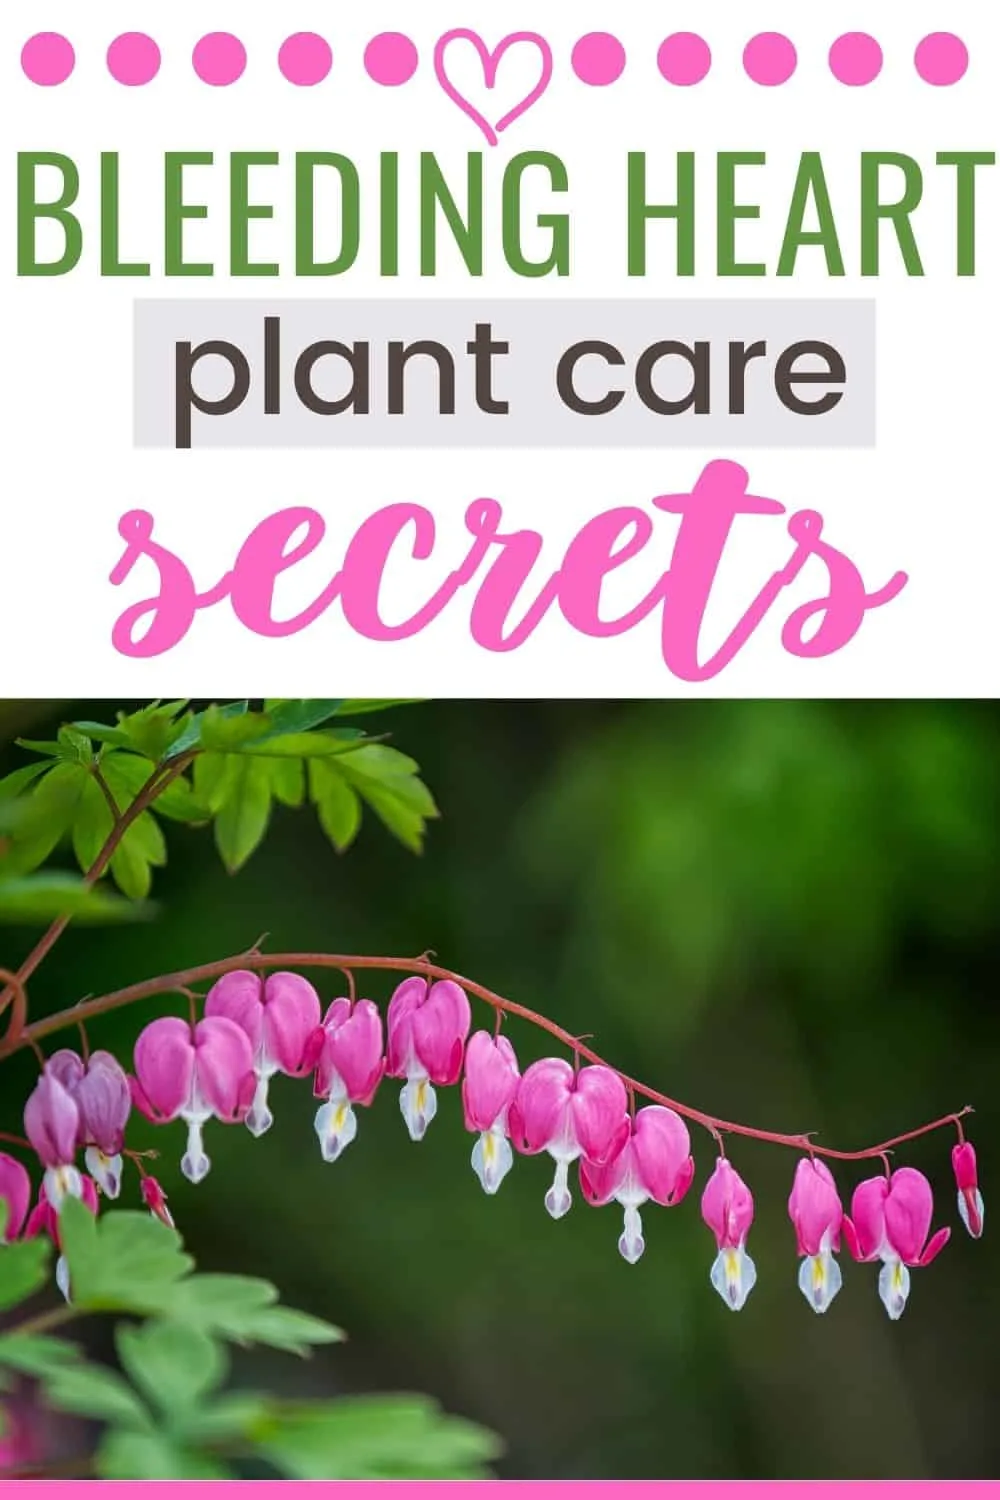 Bleeding heart plant care secrets